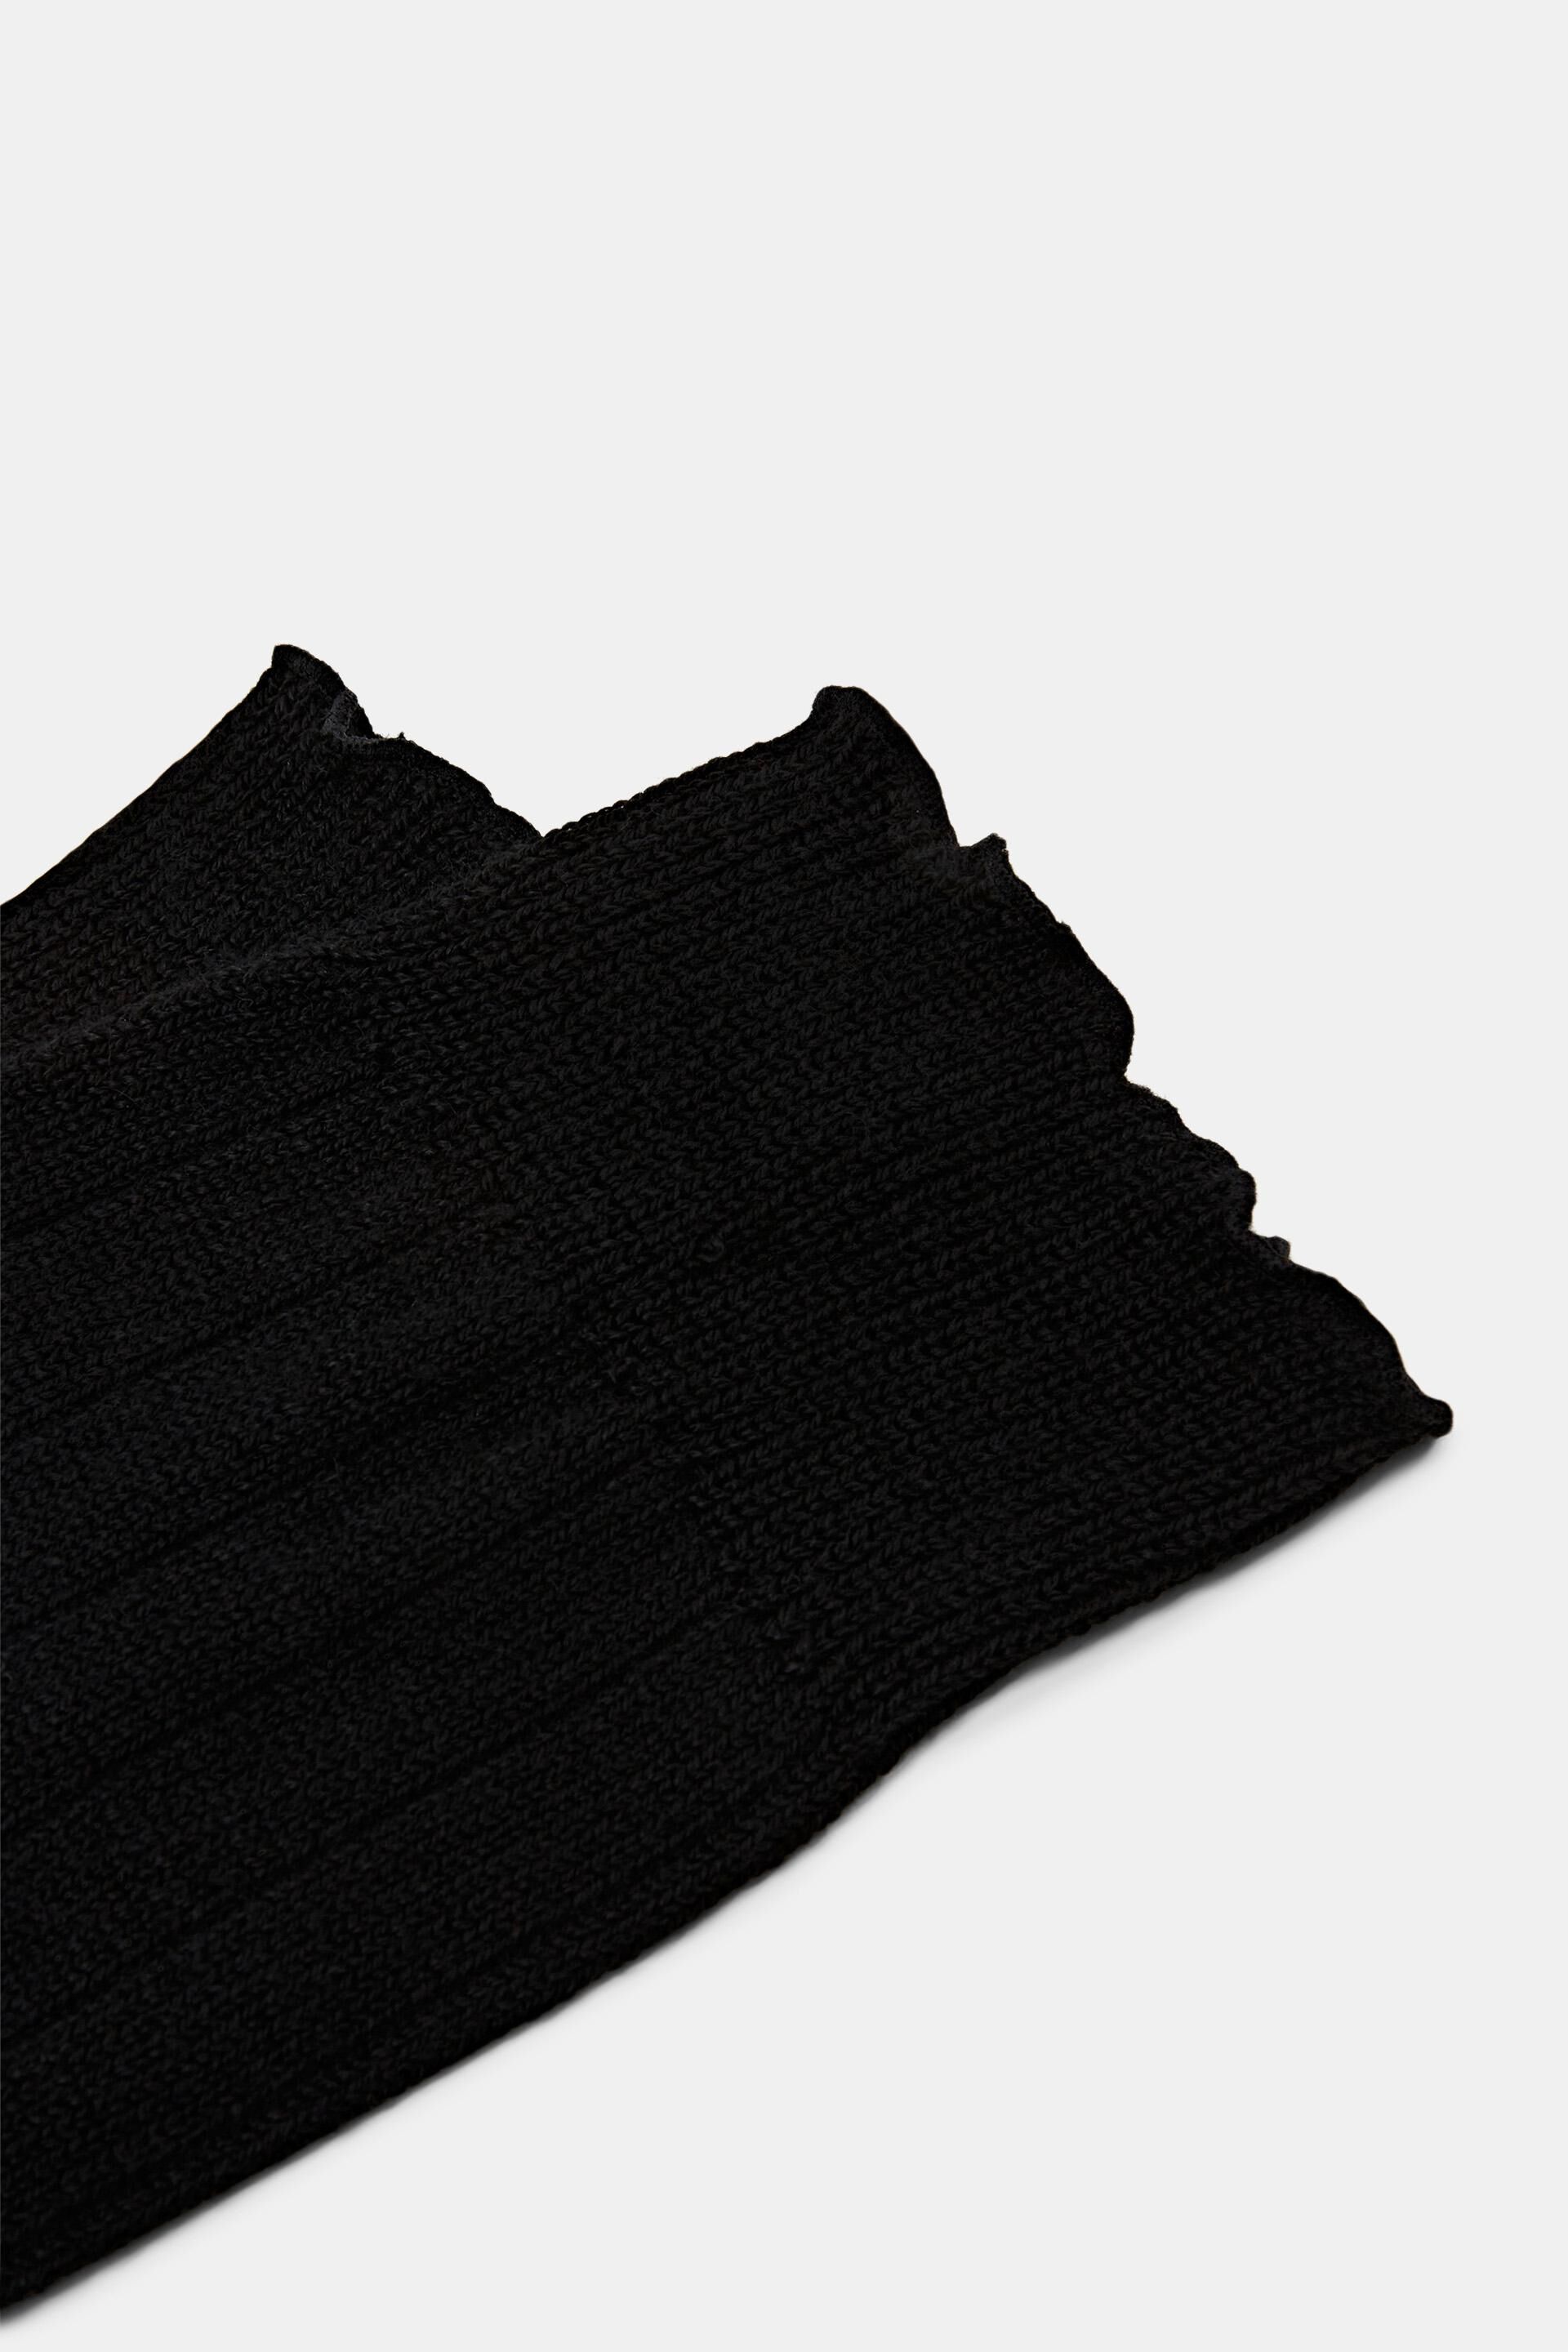 ESPRIT - Wool blend: rib knit leg warmers at our online shop